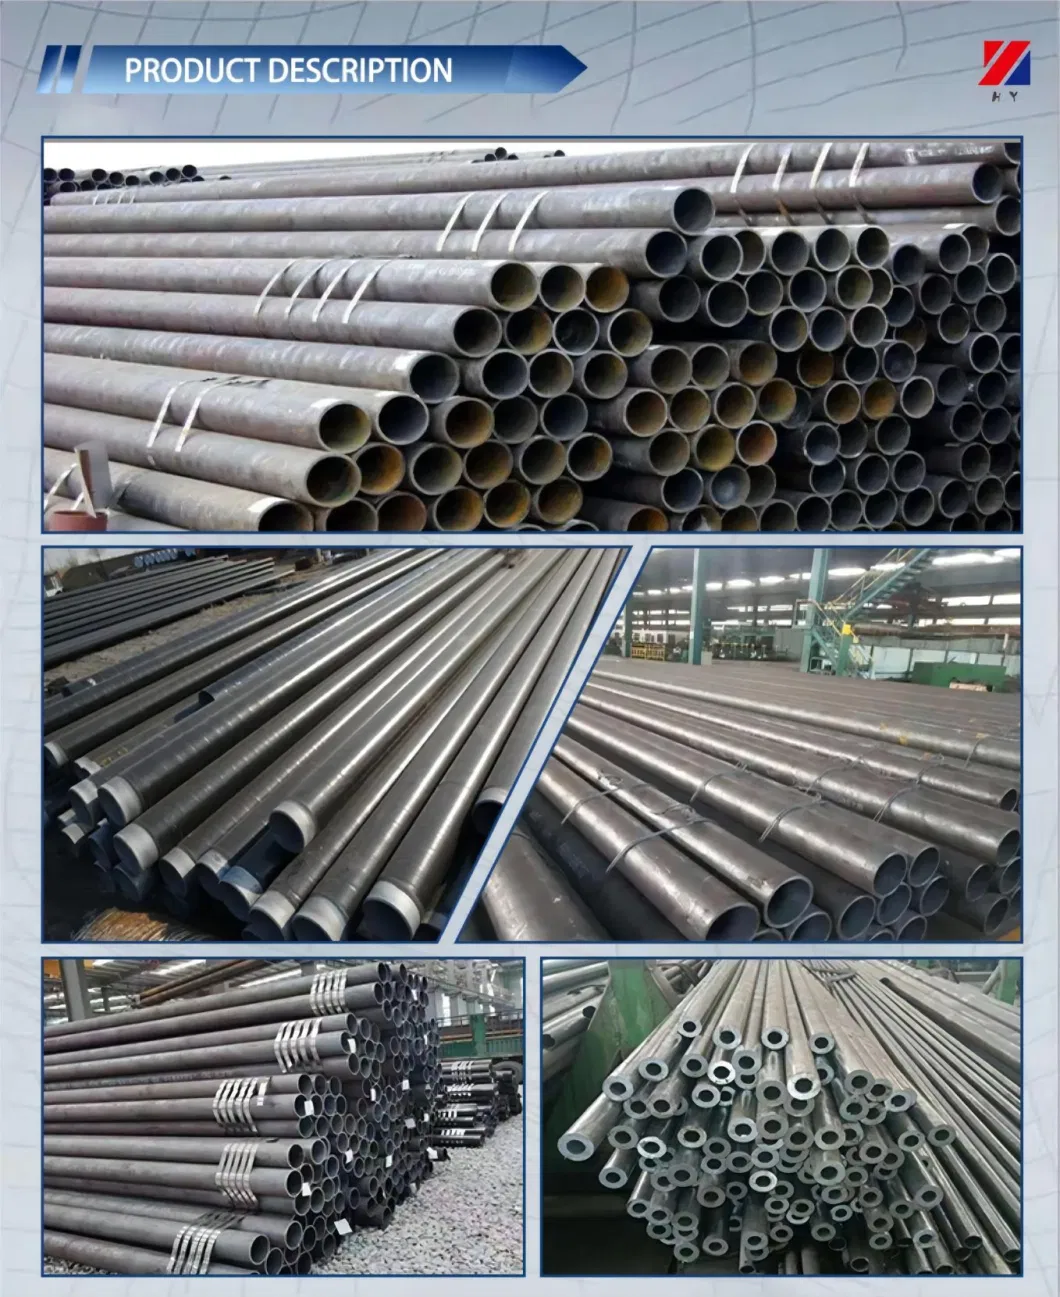 Carbon Mild Steel Ms Low Hot/Cold Rolled Carbon Steel Coil/Sheet/Pipe/Bar/Plate/Strip/Roll Round/Flat Bar/Profiel/Angle/Channal/Beam/Billet/Ingot/Rebar Sheet